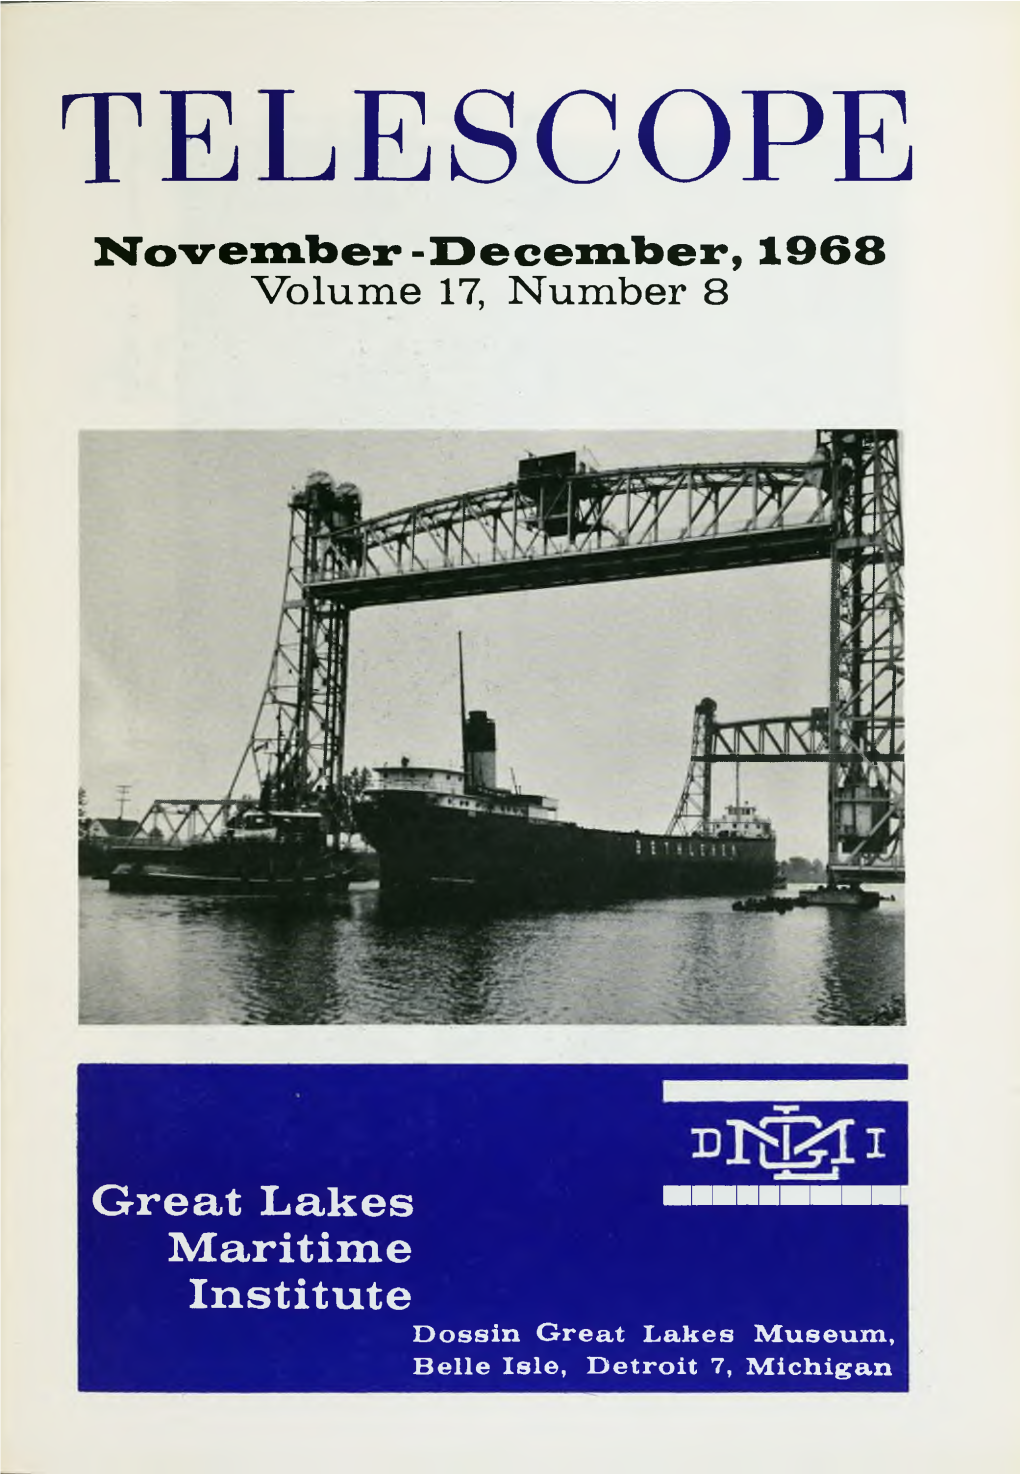 Great Lakes Maritime Institute